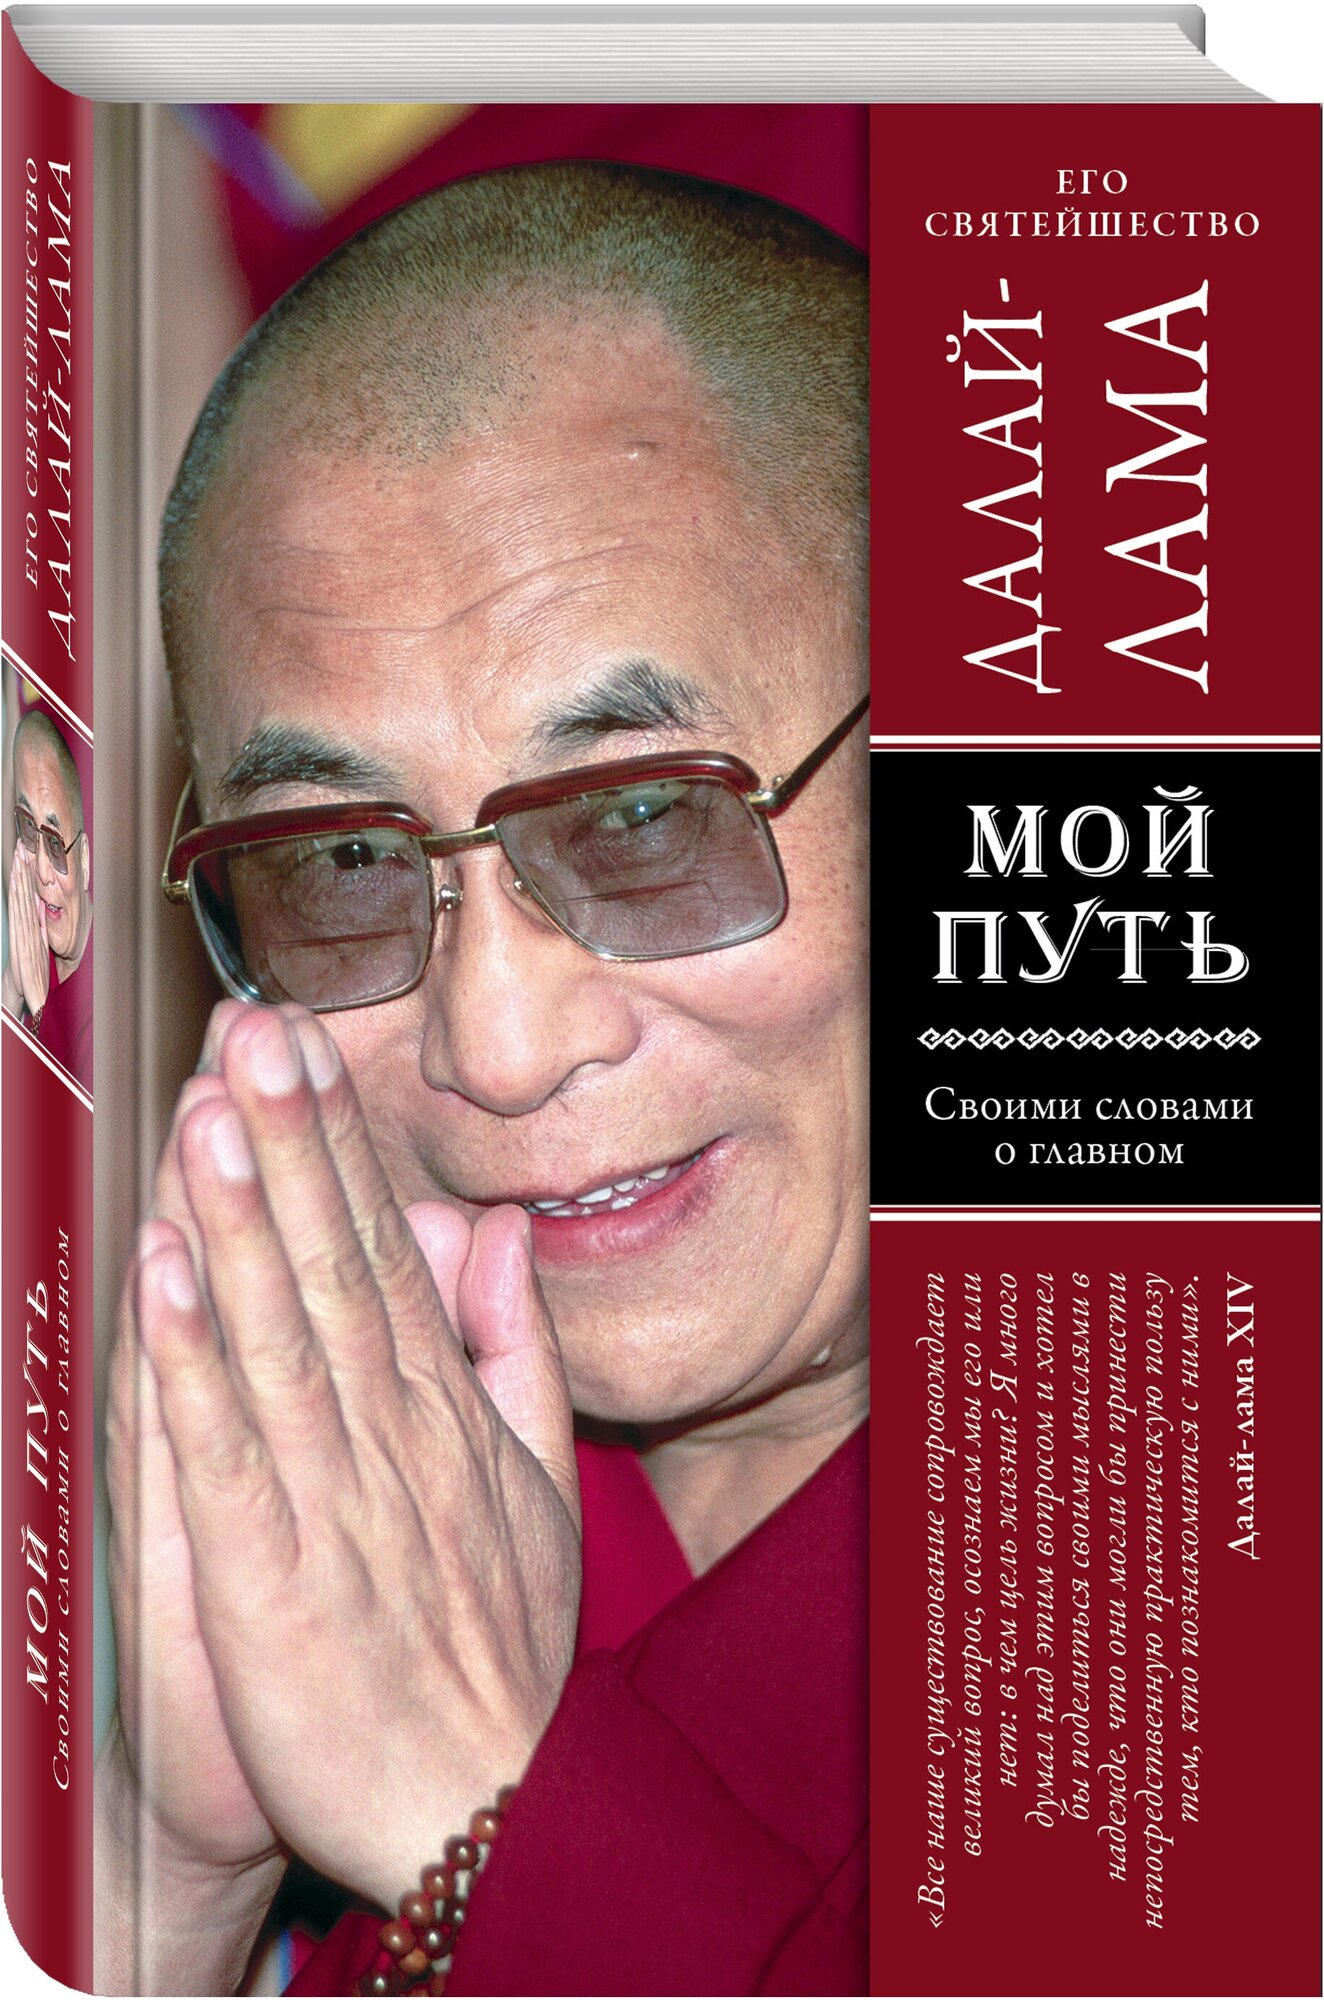 Мой путь (Далай-лама) - фото №1